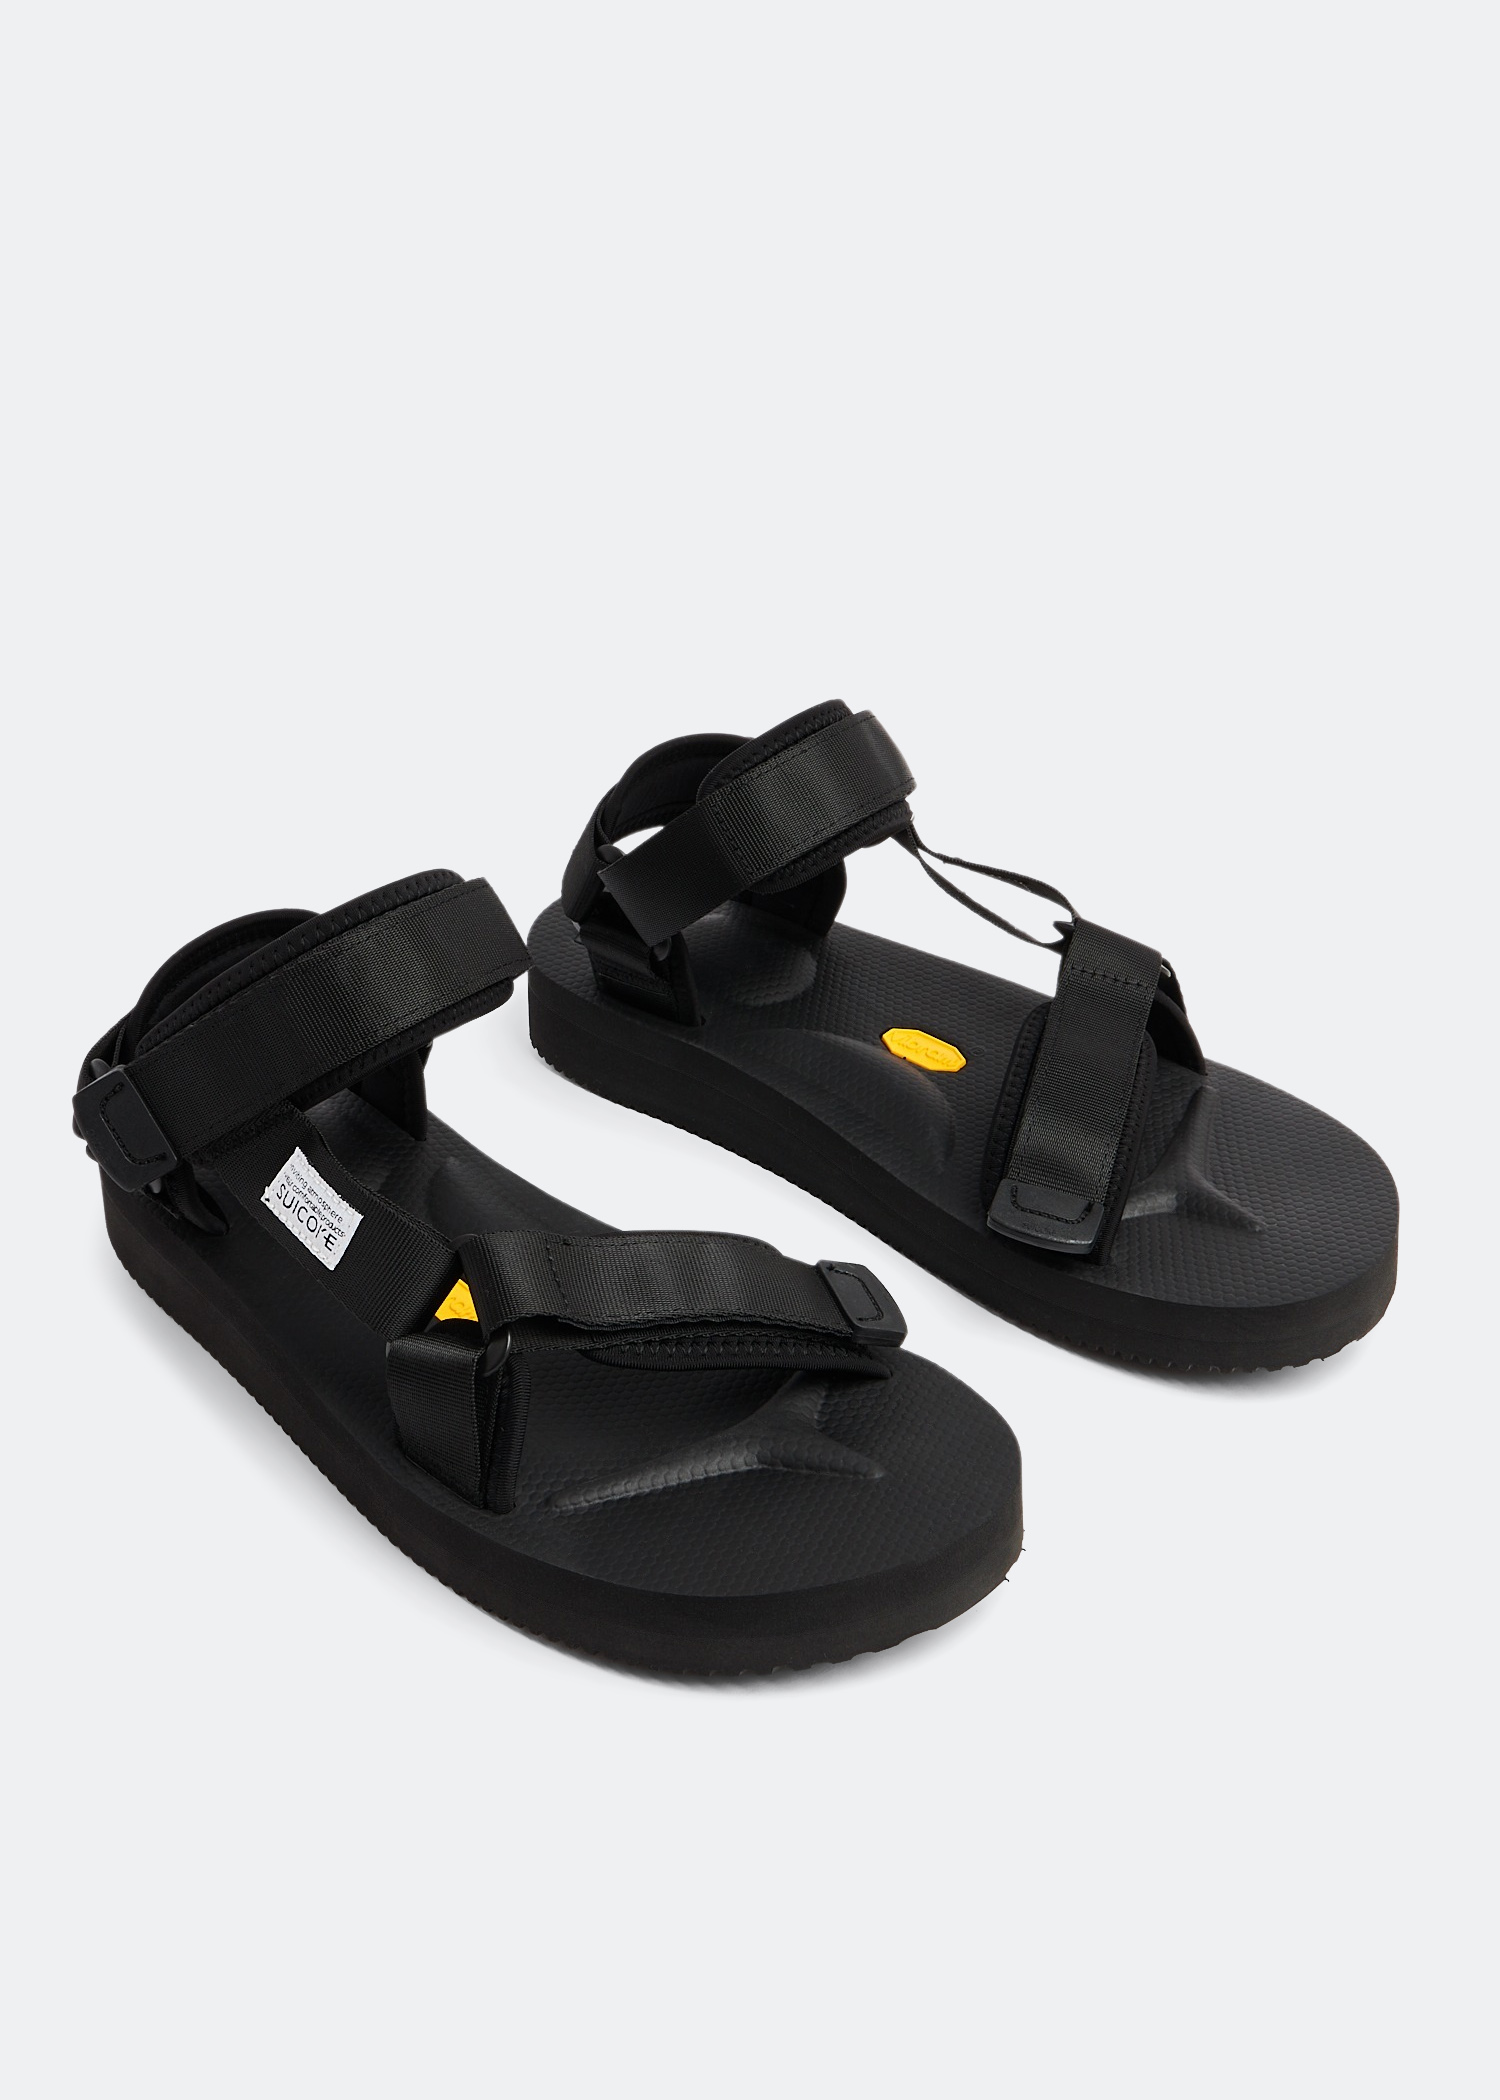 Suicoke Depa-V2 sandals for Women - Black in KSA | Level Shoes